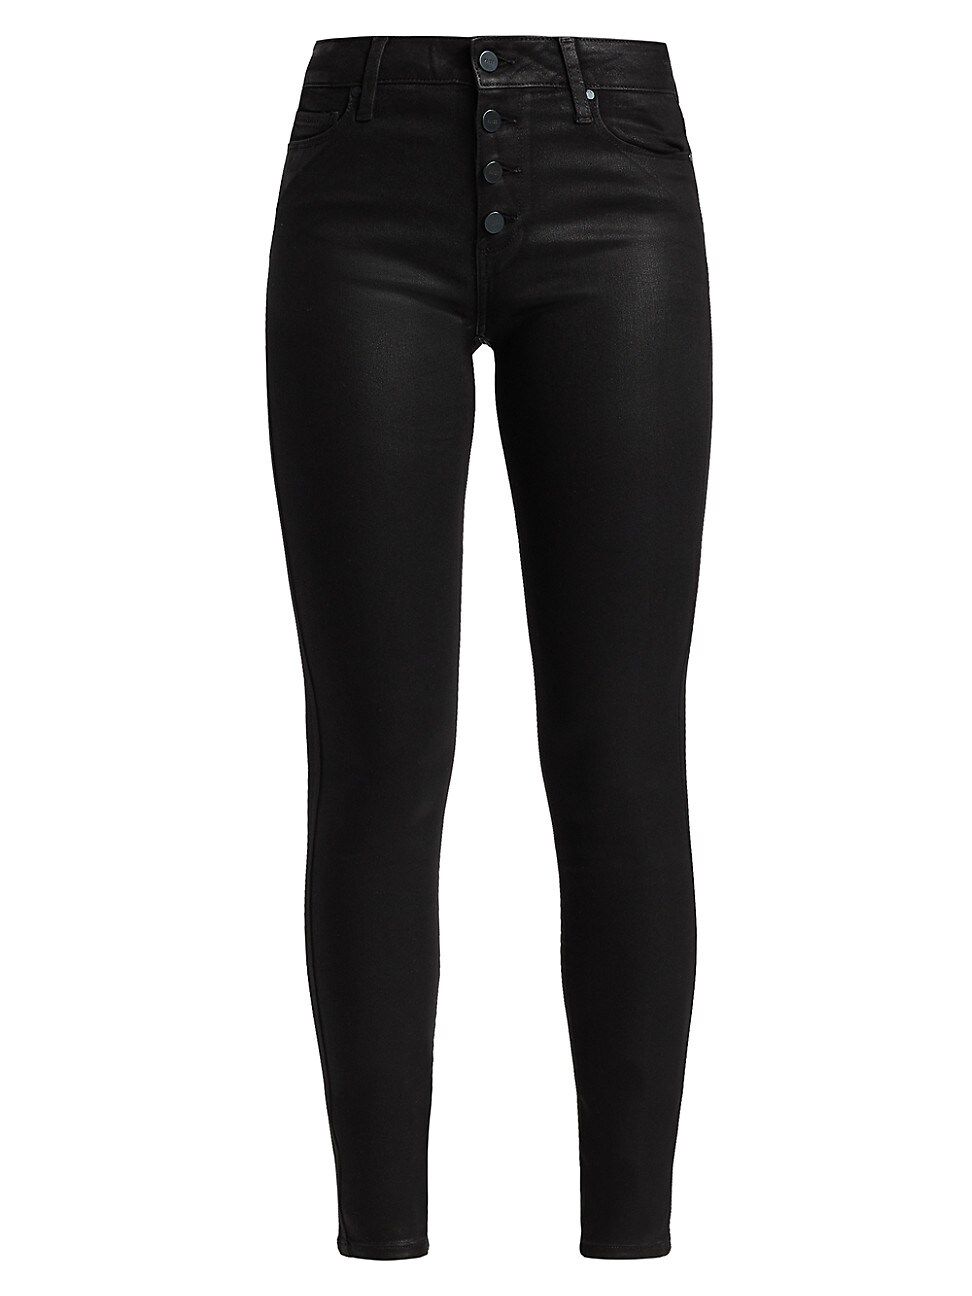 Paige Jeans Women's Hoxton Fog Luxe Coated Jeans - Black Fog - Size Denim: 27 | Saks Fifth Avenue